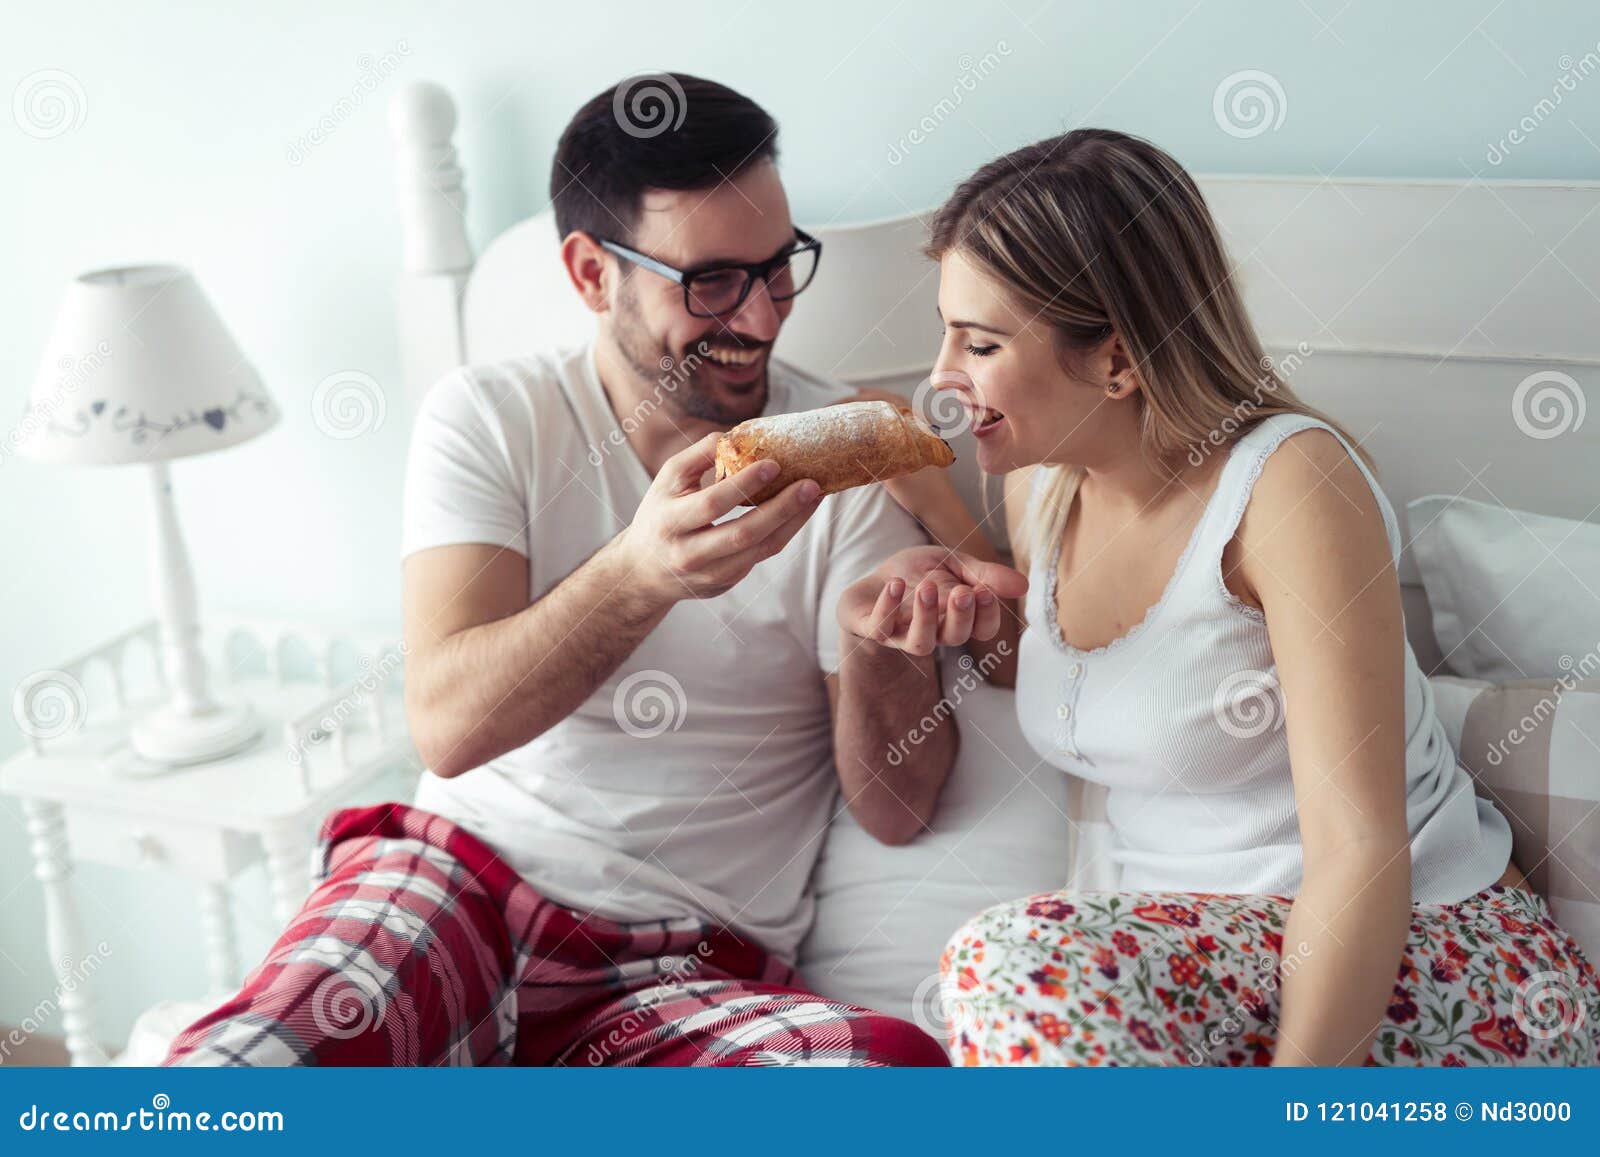 Romantic Young Couple Having Fun In Bedroom Stock Photo I